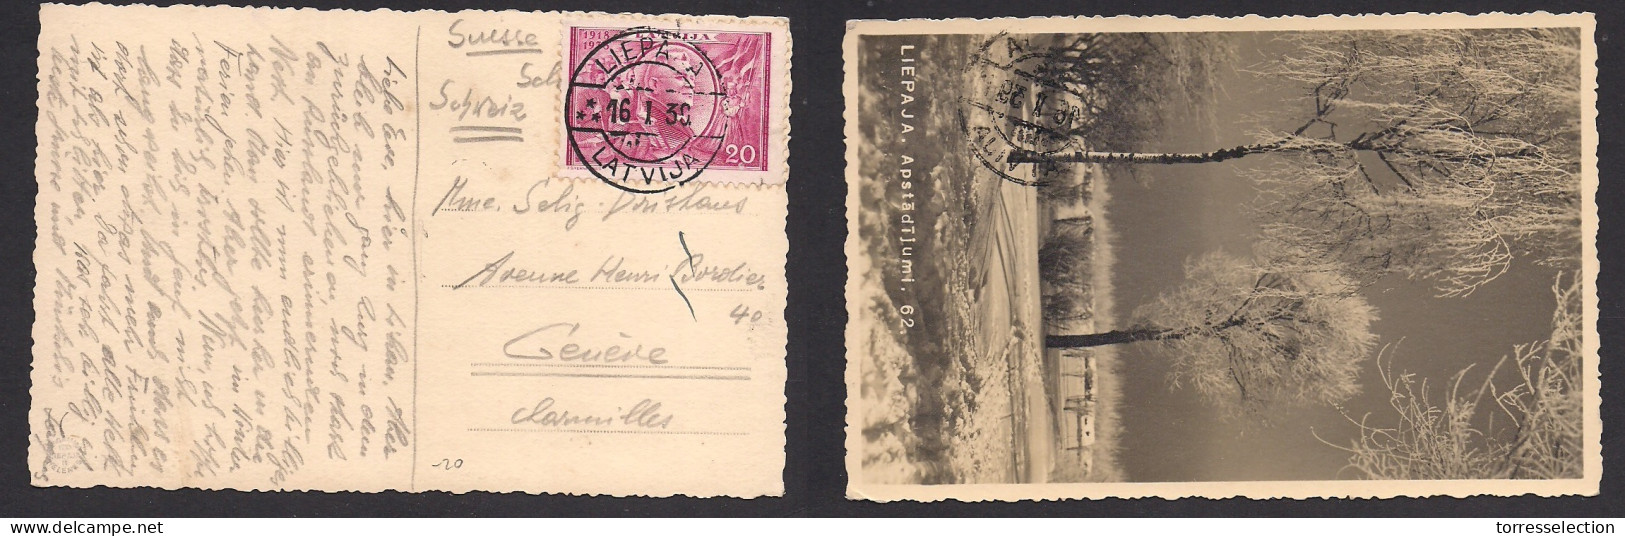 LATVIA. 1939 (16 Jan) Liepaja - Switzerland, Geneve. Single 20c Violet Fkd Ppc. Fine. - Lettonie